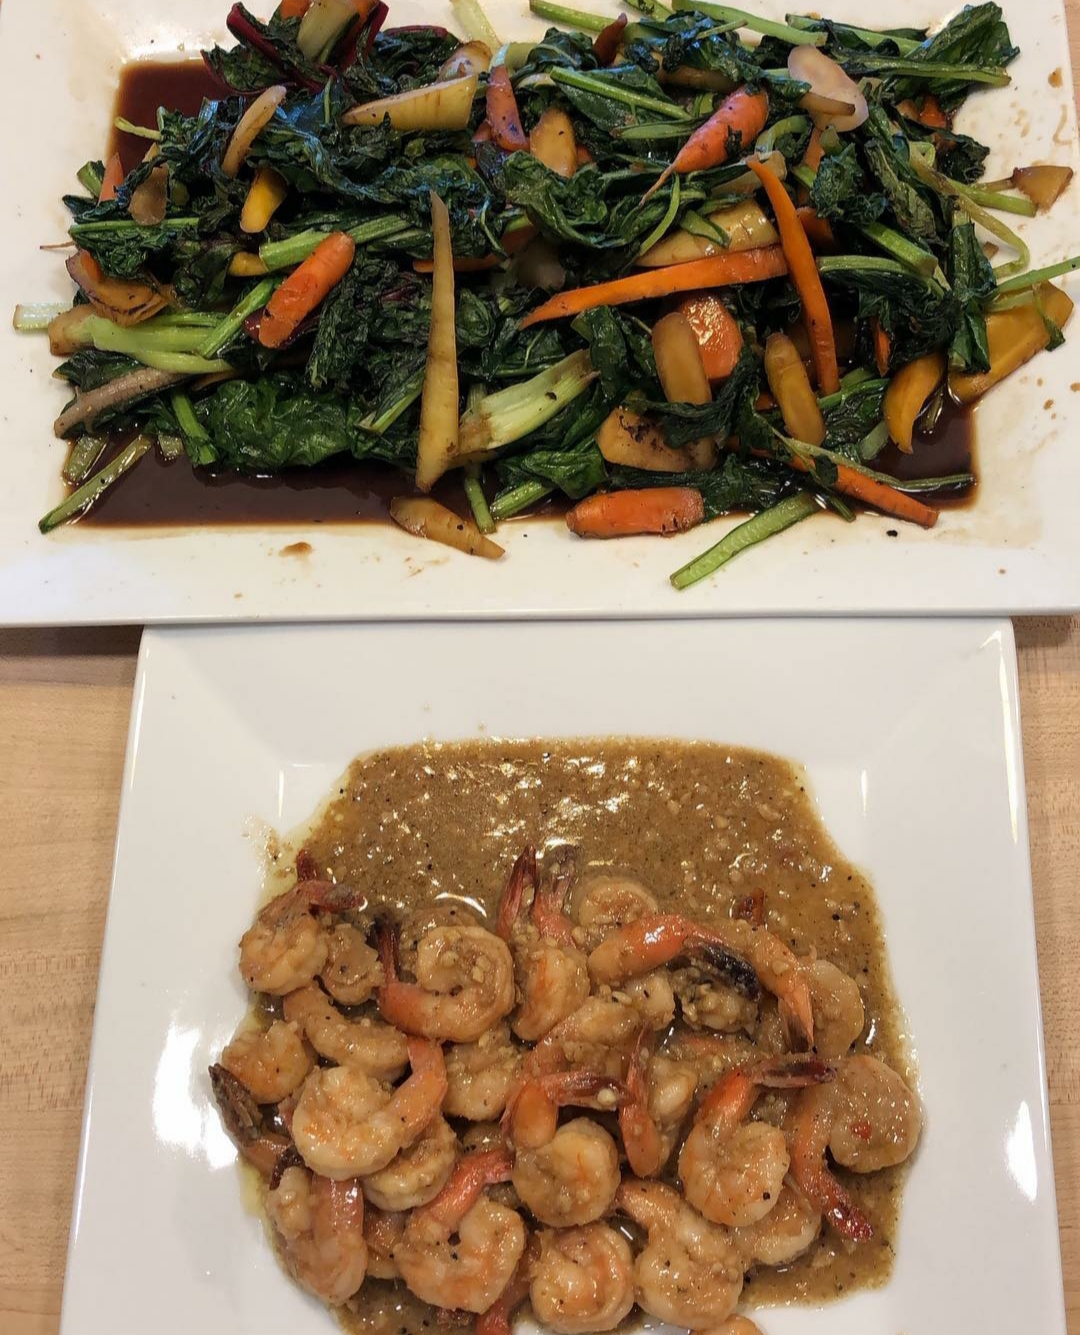 Plate of garlic shrimp and stir fry vegetables